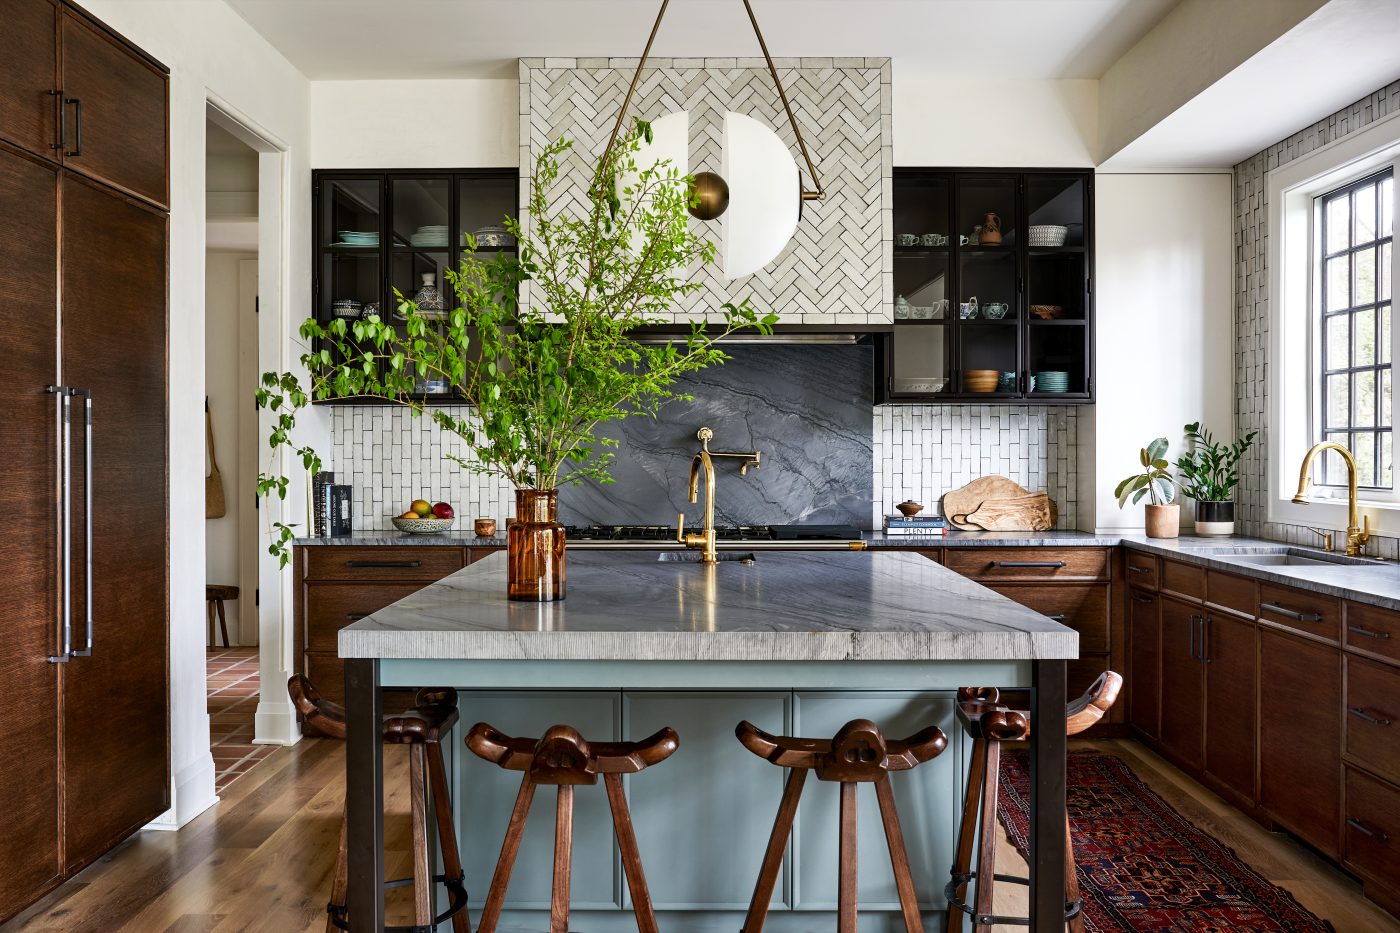 Kitchen of Zoe Feldman designed home in Virginia suburbs of Washington DC